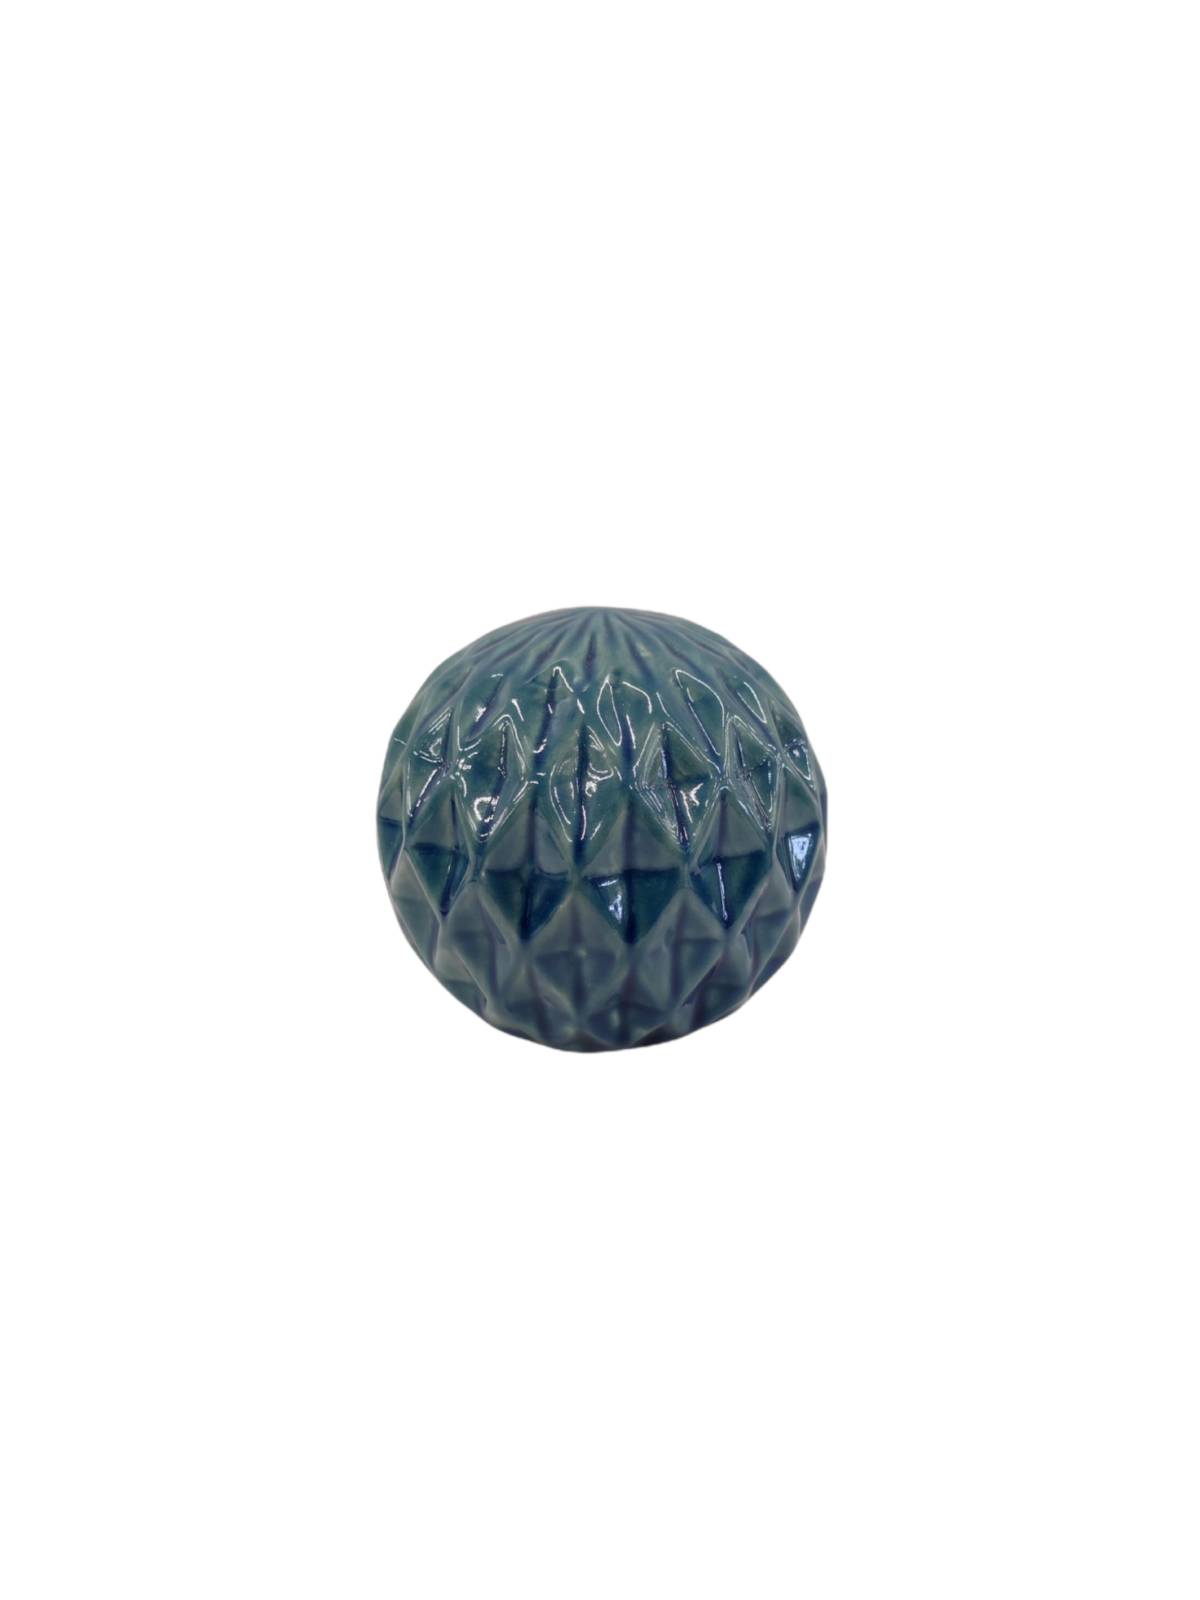 Decorative ceramic ball